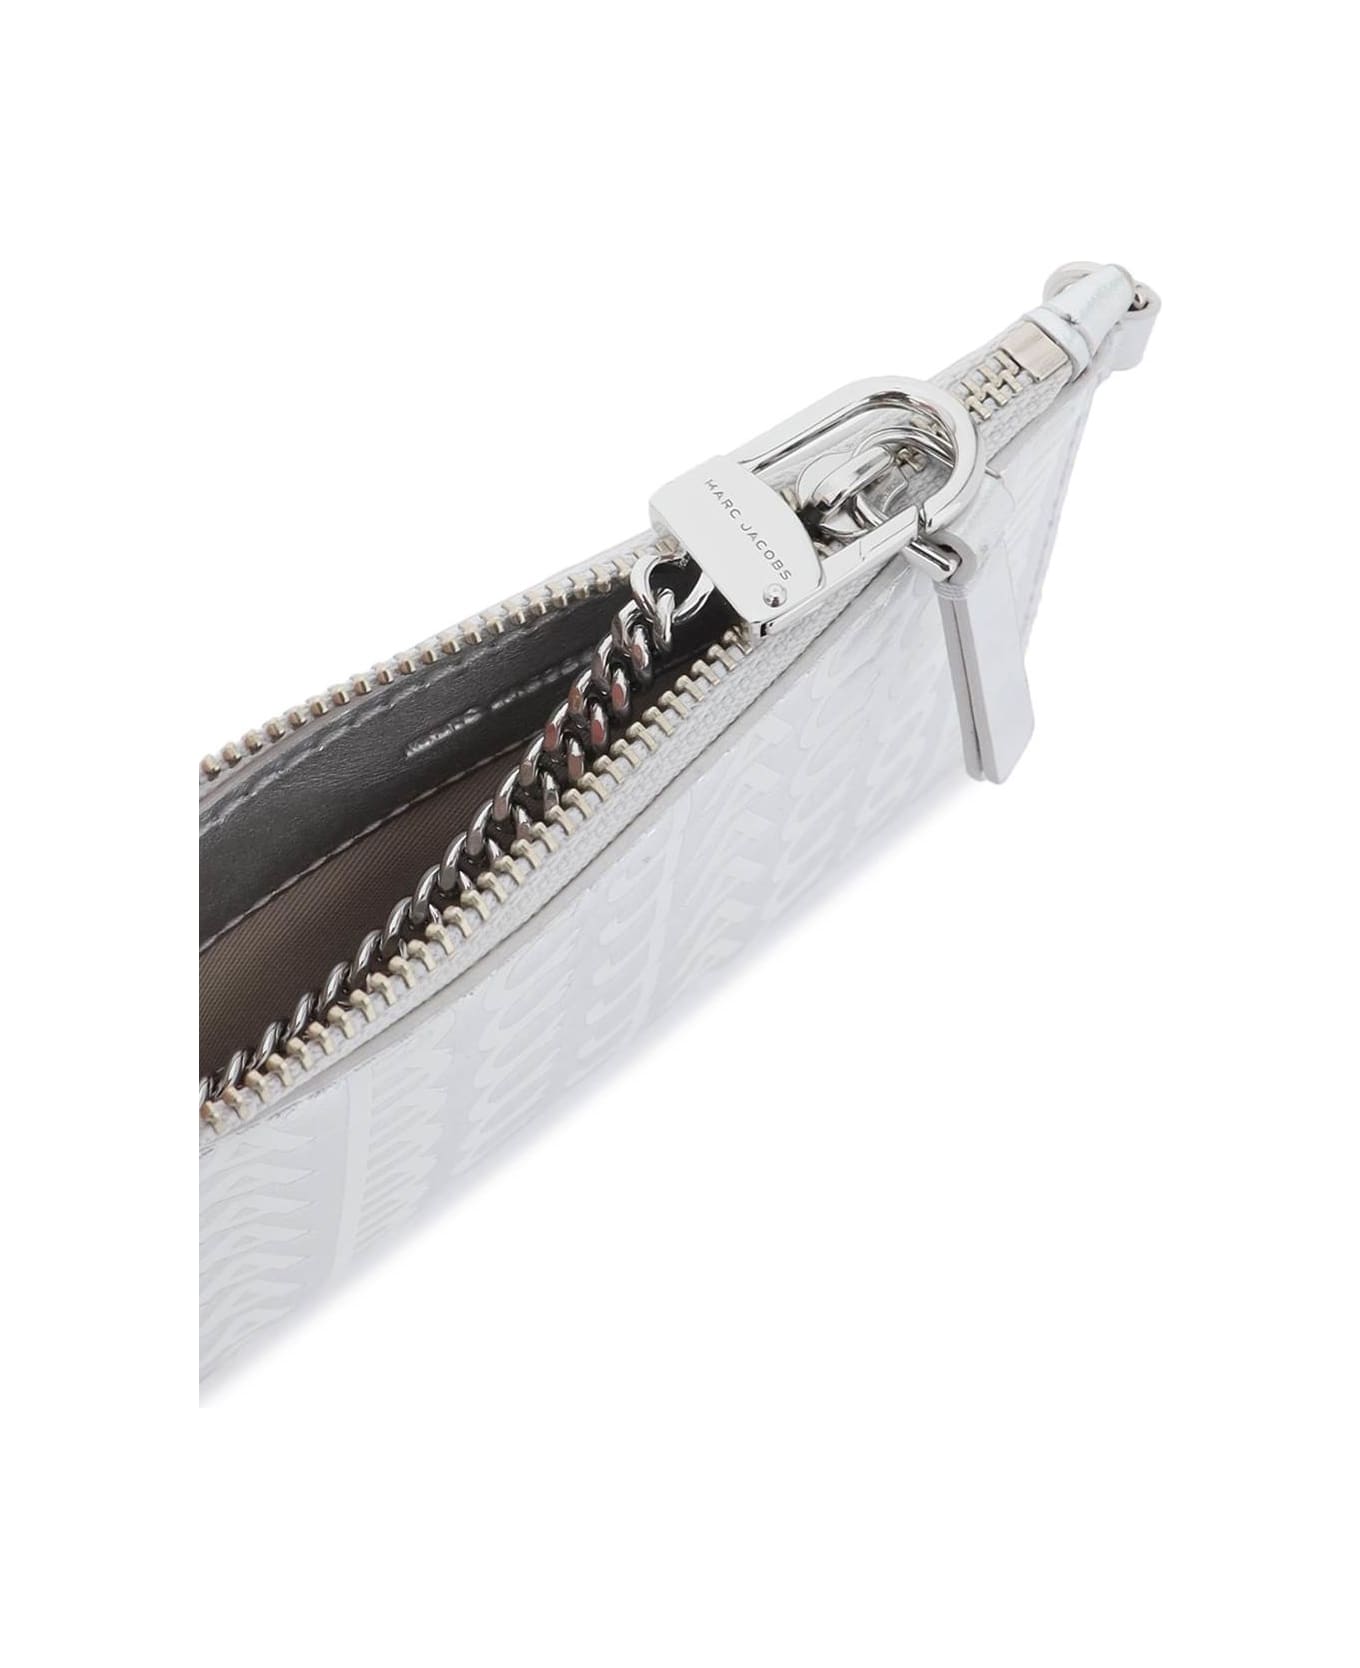 Marc Jacobs The Metallic Top Zip Wristlet Wallet - SILVER BRIGHT WHITE (Silver)